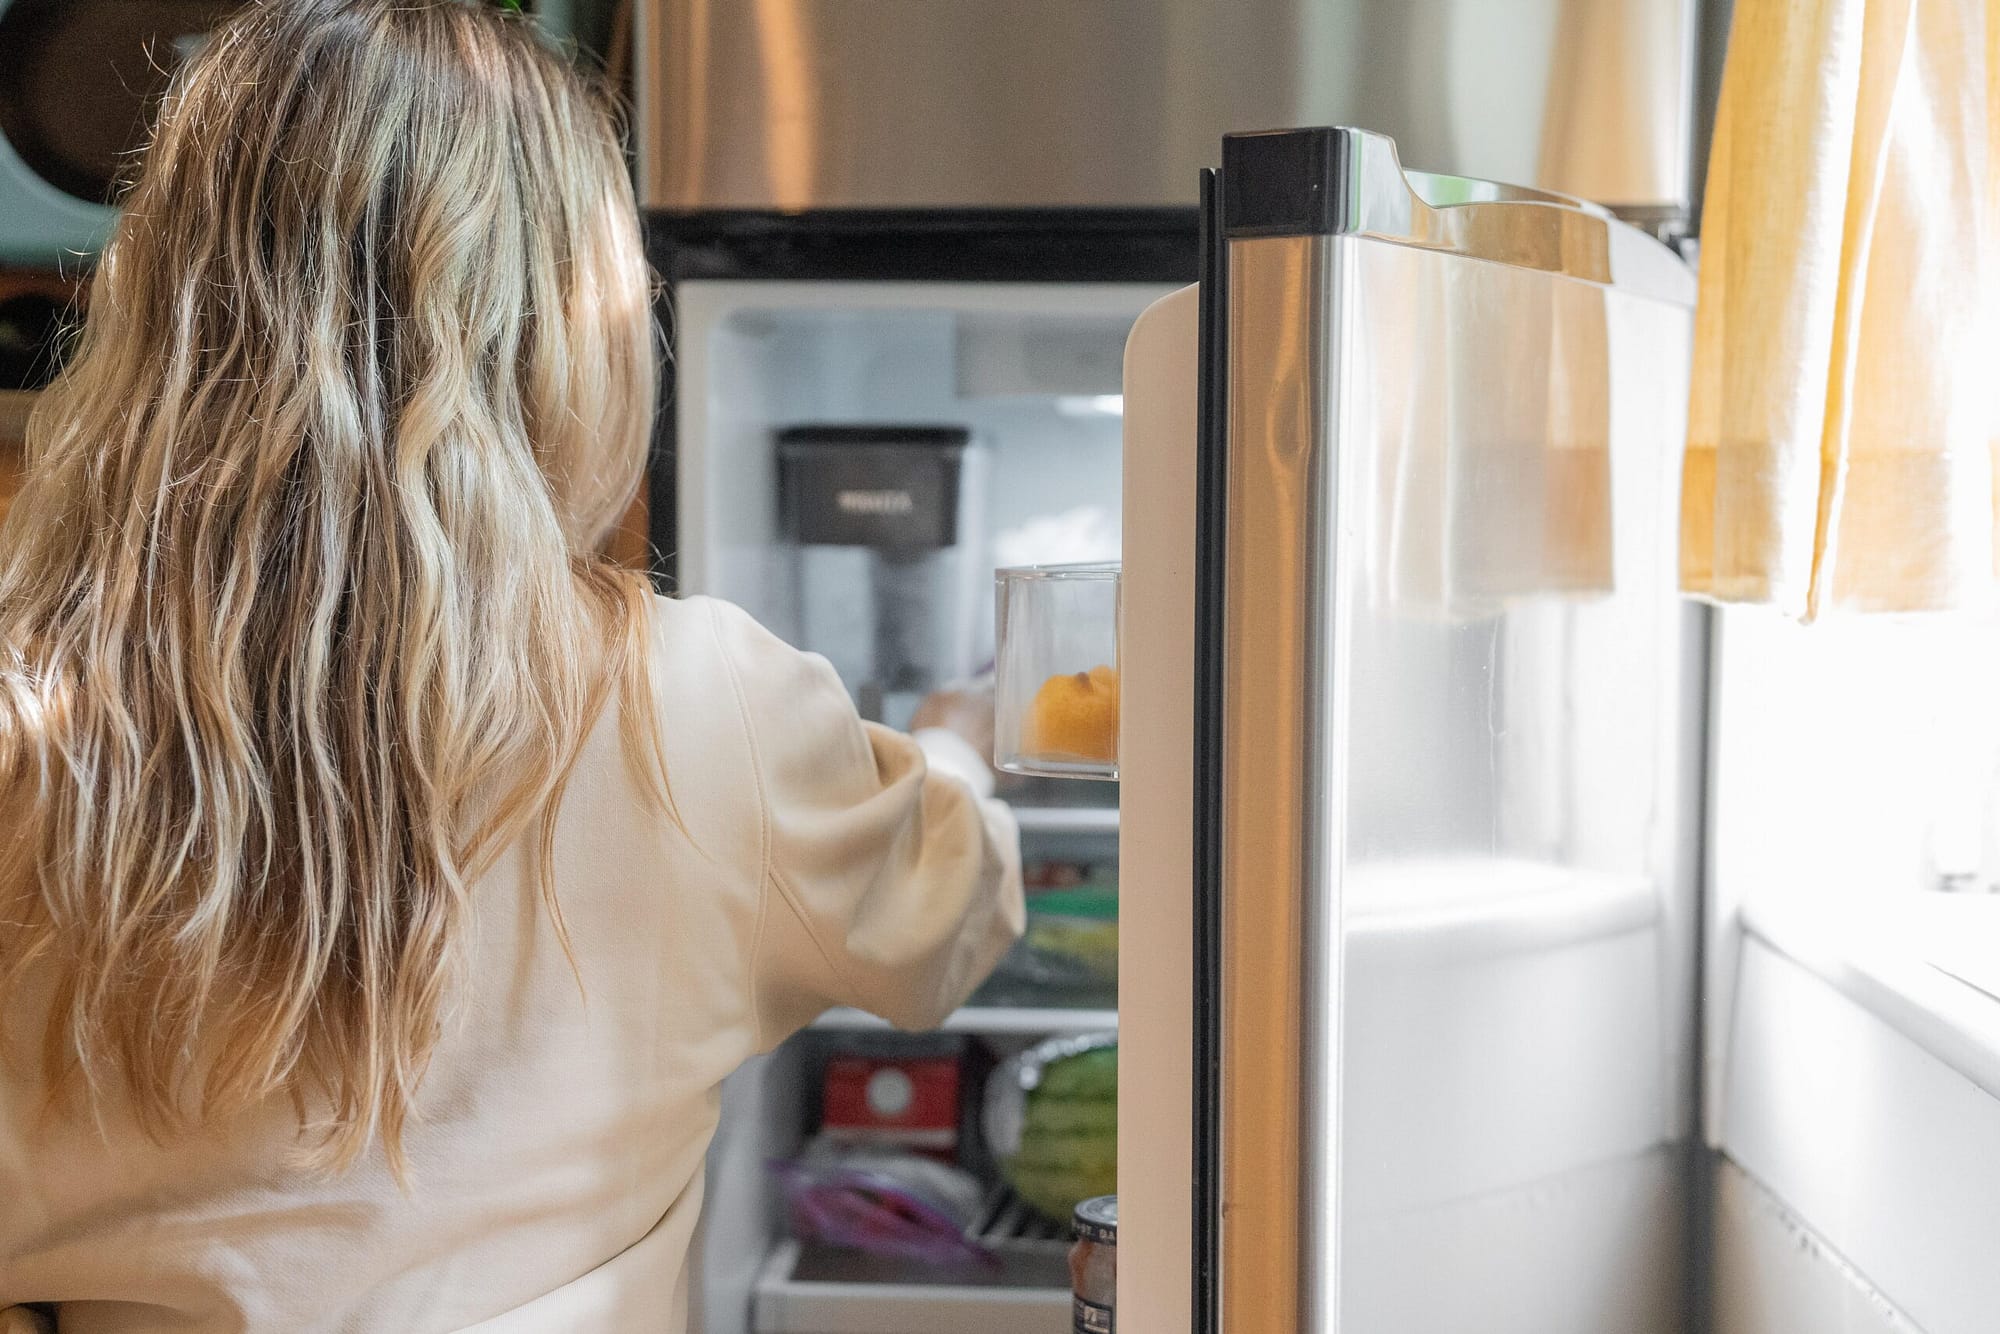 Woman opening fridge and reaching inside